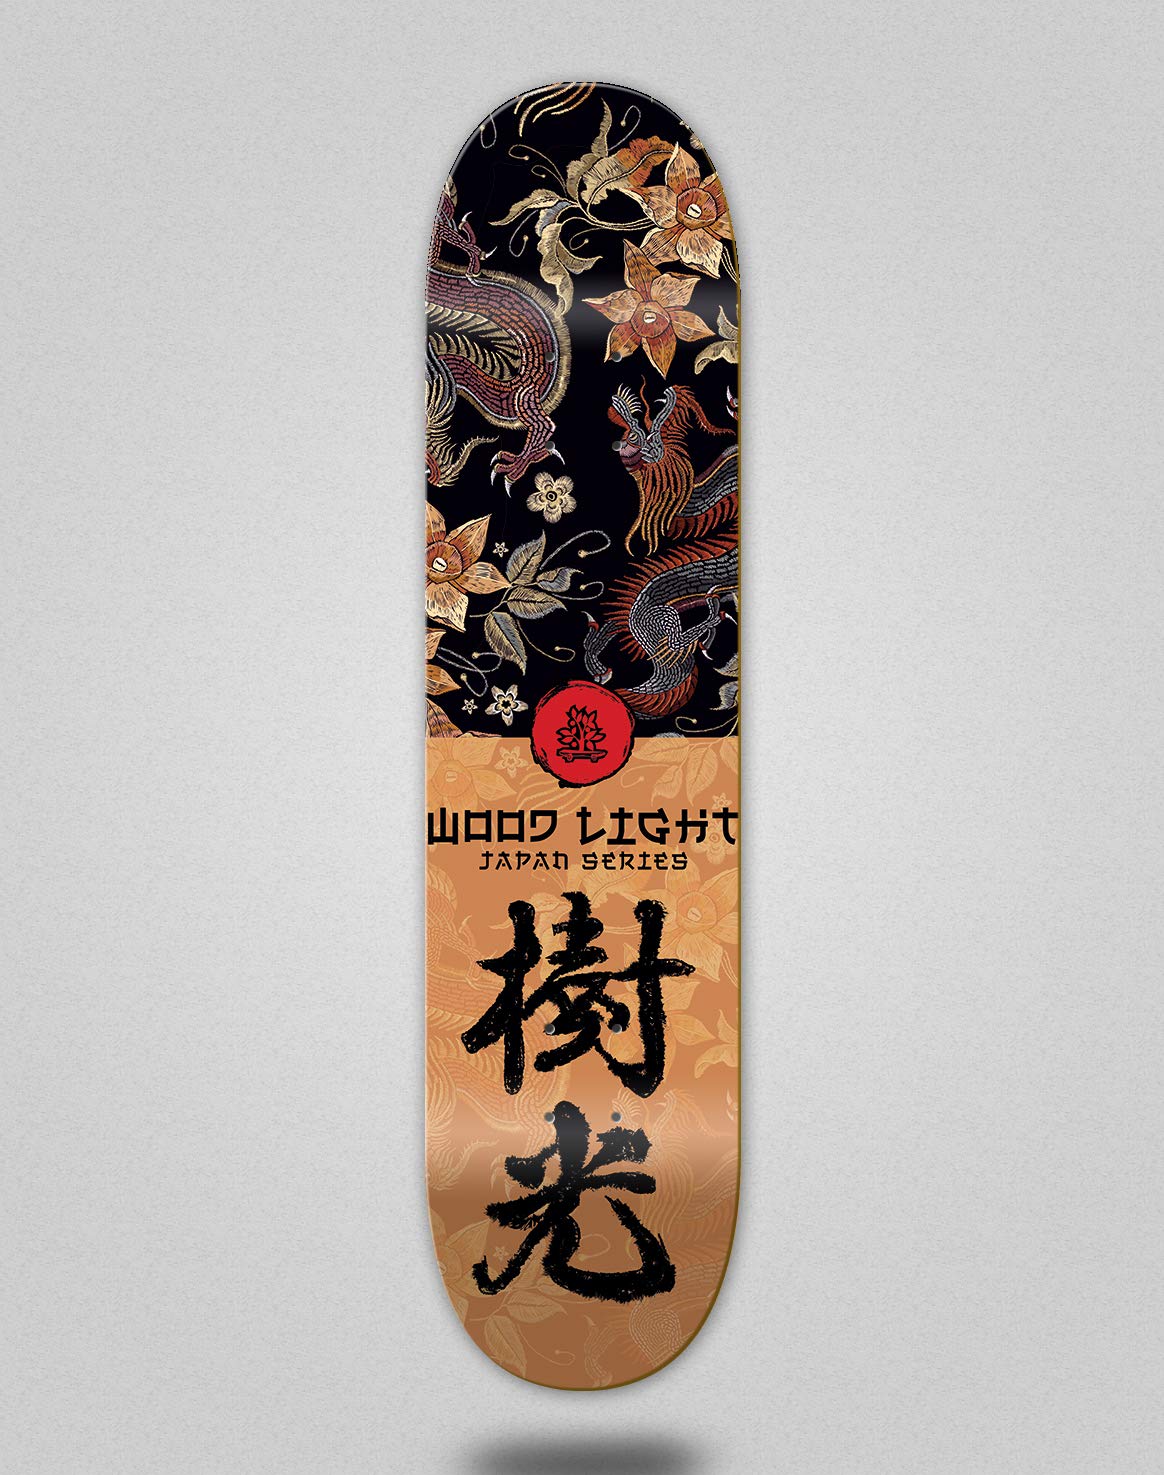 Wood light Monopatín Skate Skateboard Deck Tabla Japan Series Dragon (8.25)